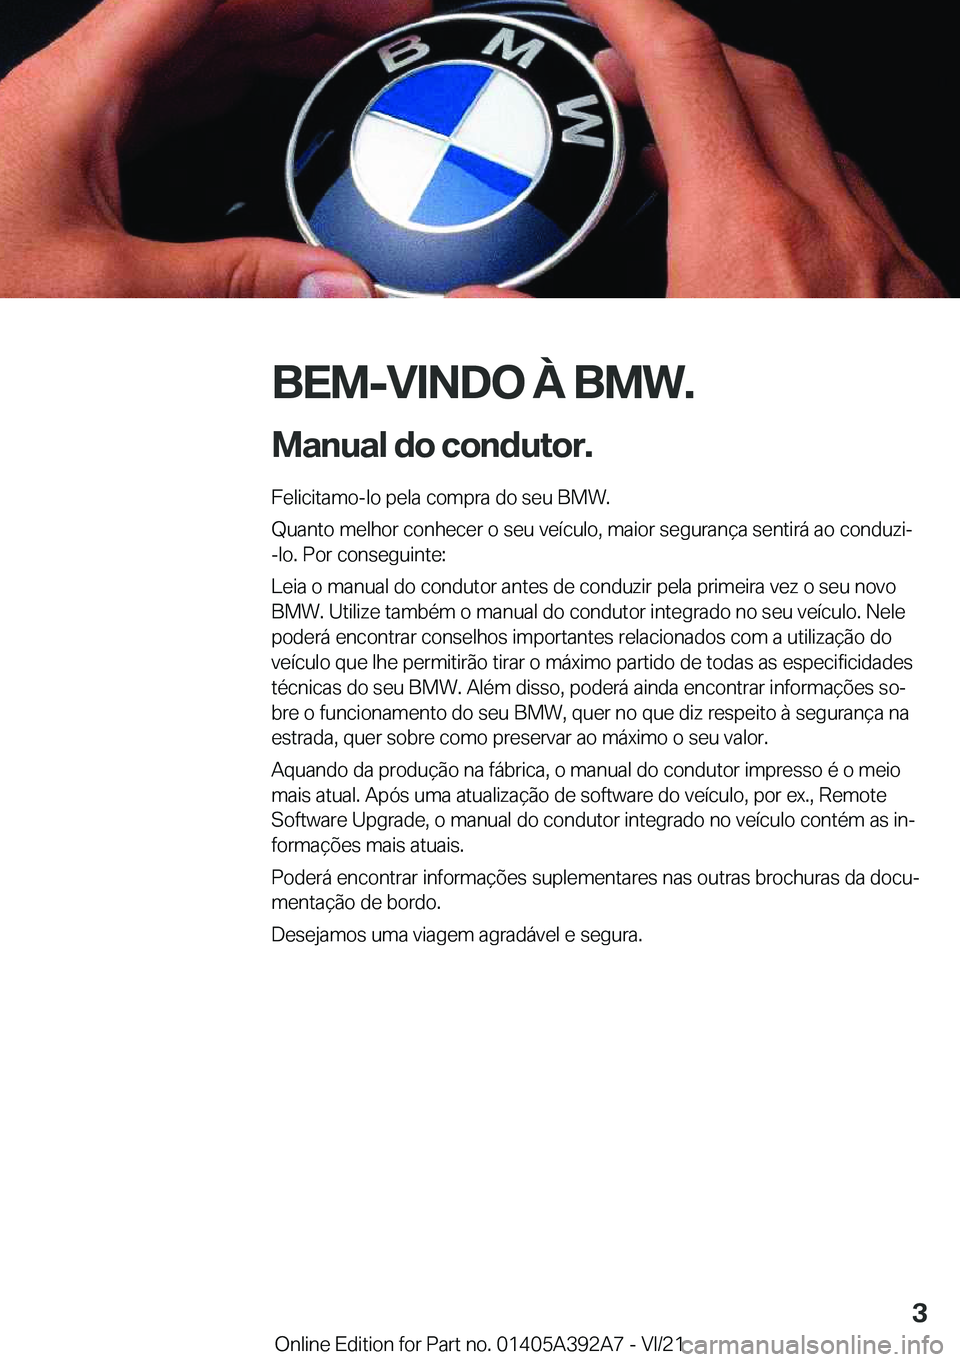 BMW 4 SERIES 2022  Manual do condutor (in Portuguese) �B�E�M�-�V�I�N�D�O��À��B�M�W�.
�M�a�n�u�a�l��d�o��c�o�n�d�u�t�o�r�. �F�e�l�i�c�i�t�a�m�o�-�l�o��p�e�l�a��c�o�m�p�r�a��d�o��s�e�u��B�M�W�.
�Q�u�a�n�t�o��m�e�l�h�o�r��c�o�n�h�e�c�e�r��o��s